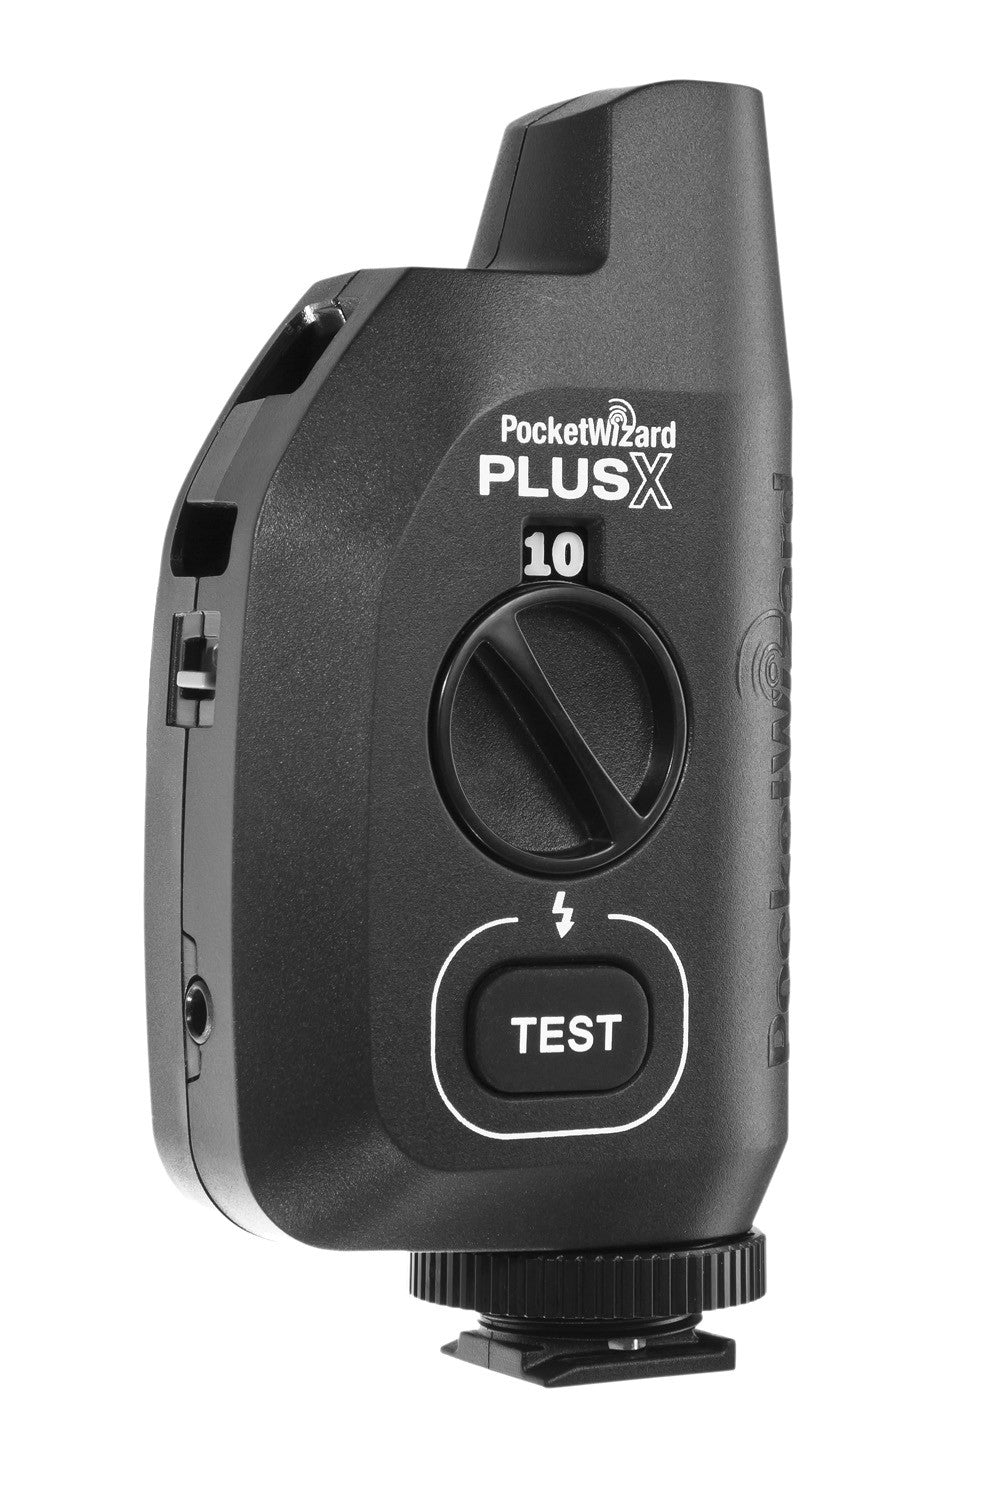 Pocket Wizard Plus X Transceiver, lighting wireless triggering, Pocket Wizard - Pictureline  - 1